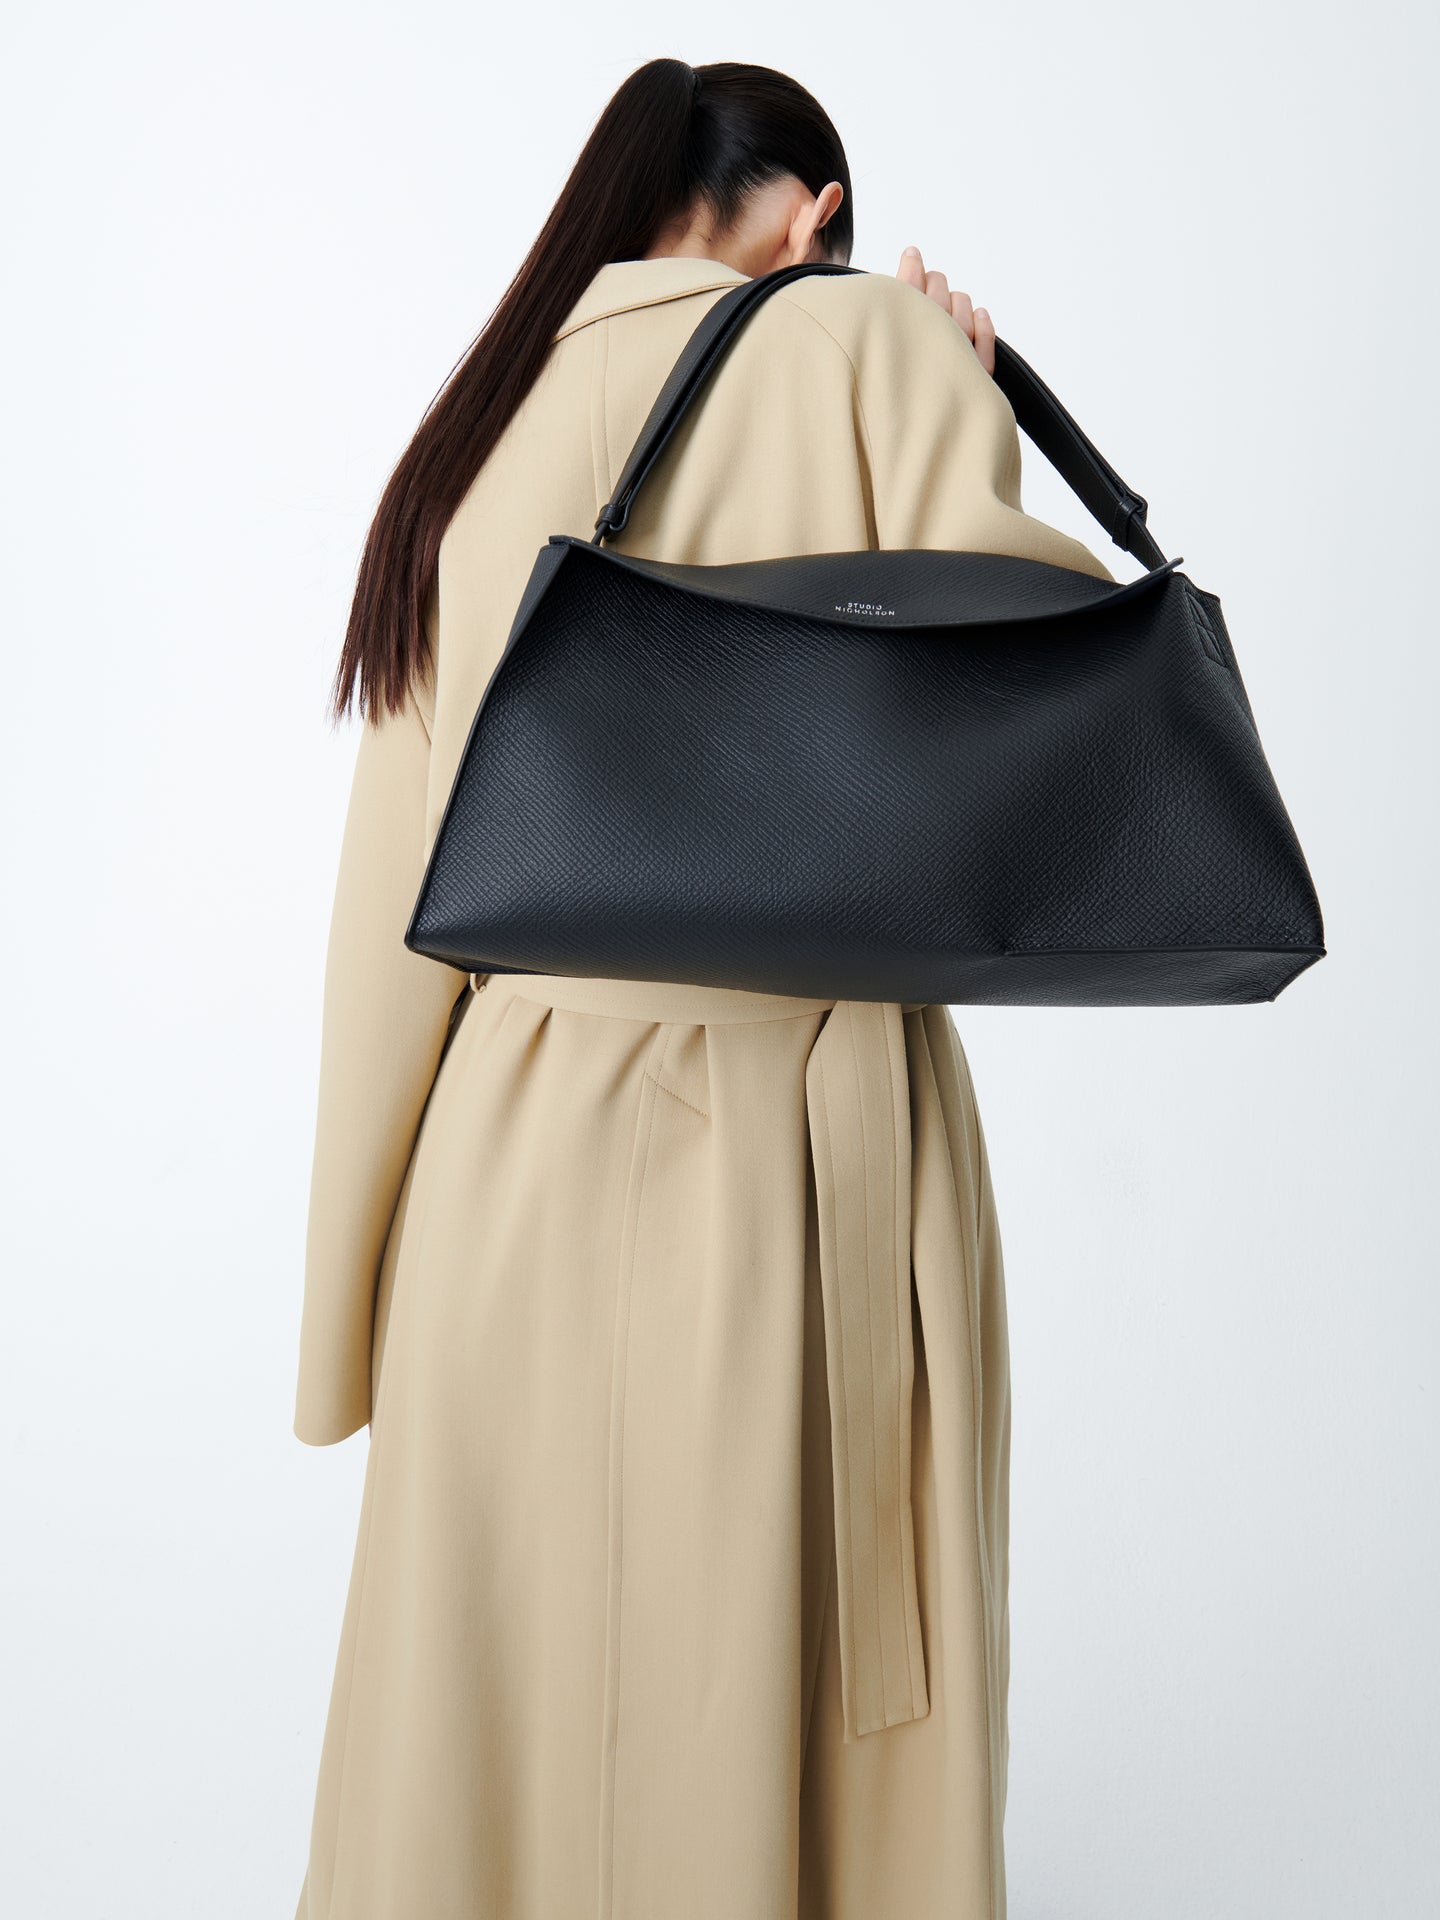 Shiboru Leather Bag in Black